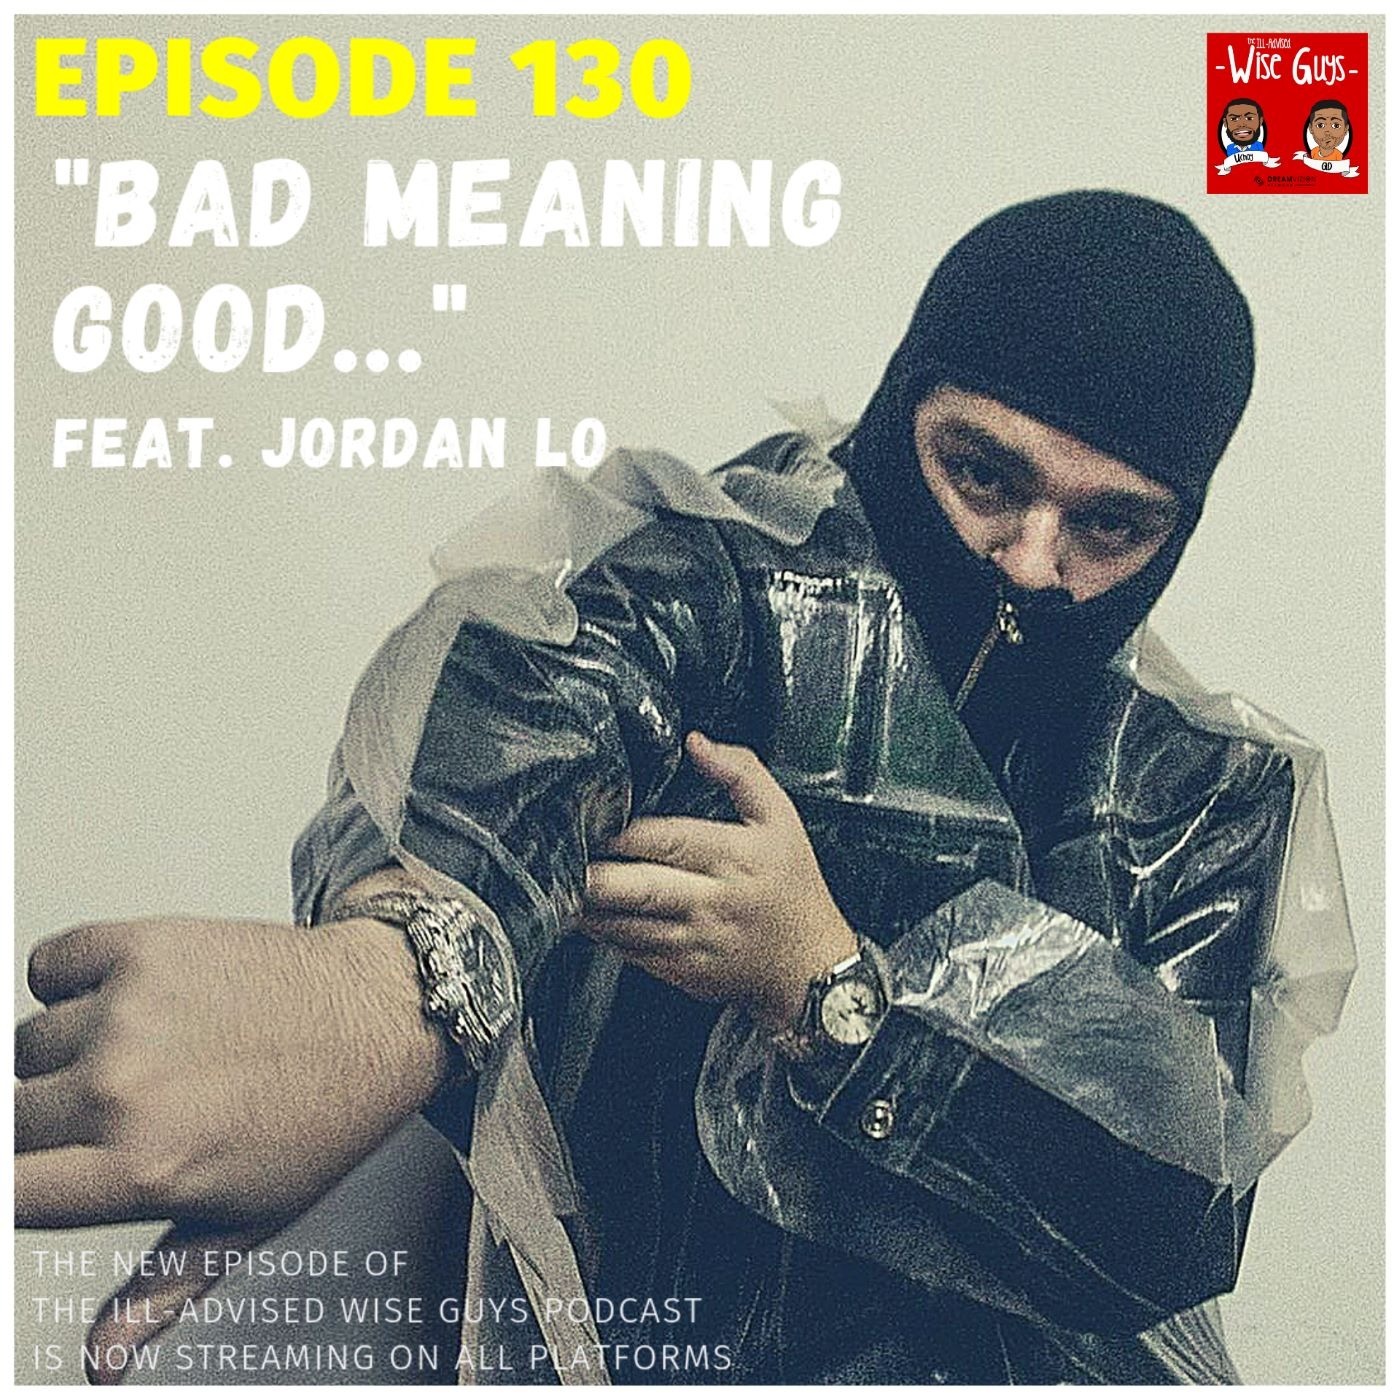 Episode 130 - "Bad Meaning Good..." (Feat. Jordan Lo) Image